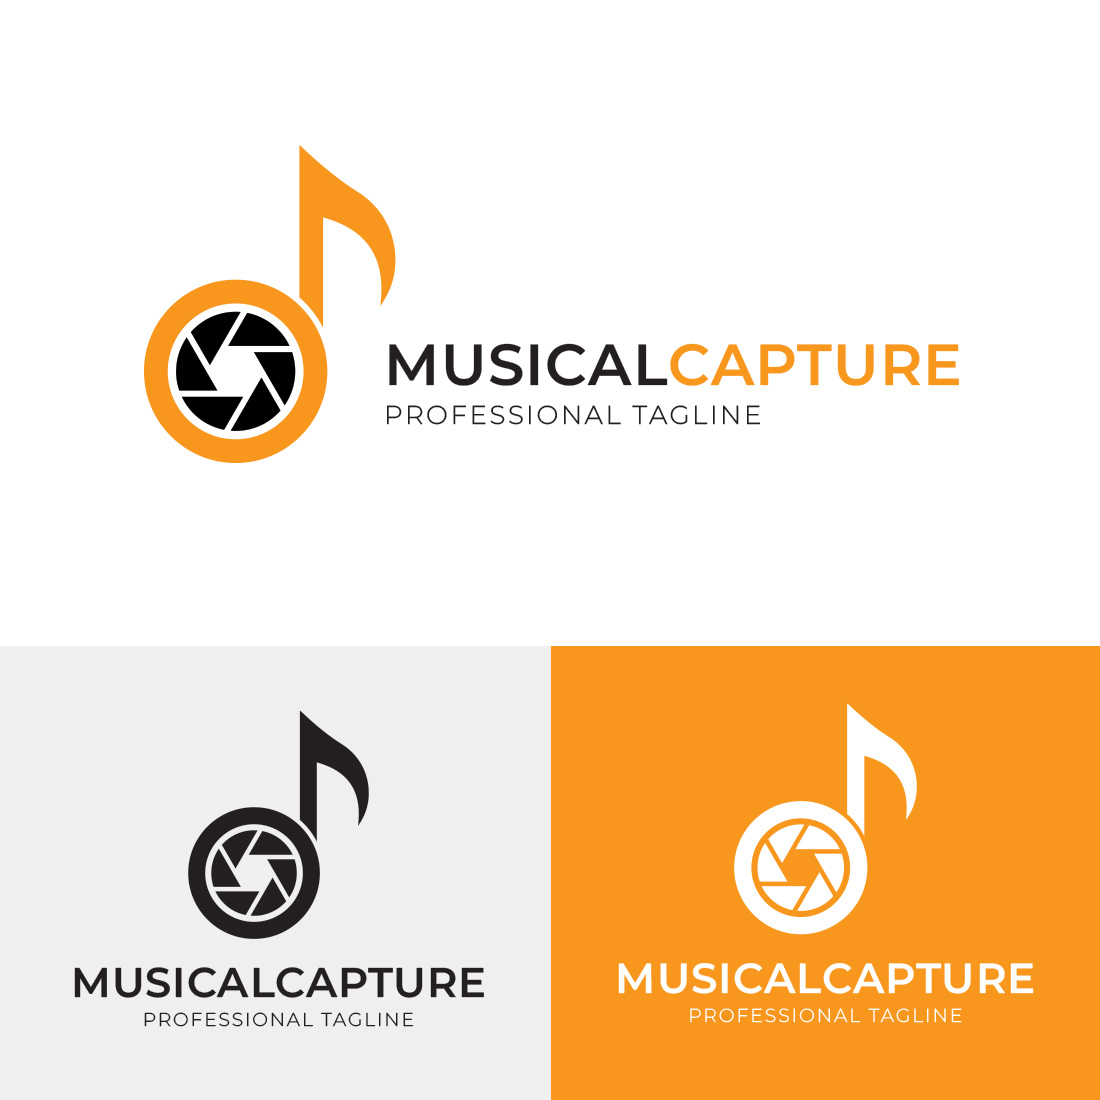 Music Photo Logo Design Template cover image.